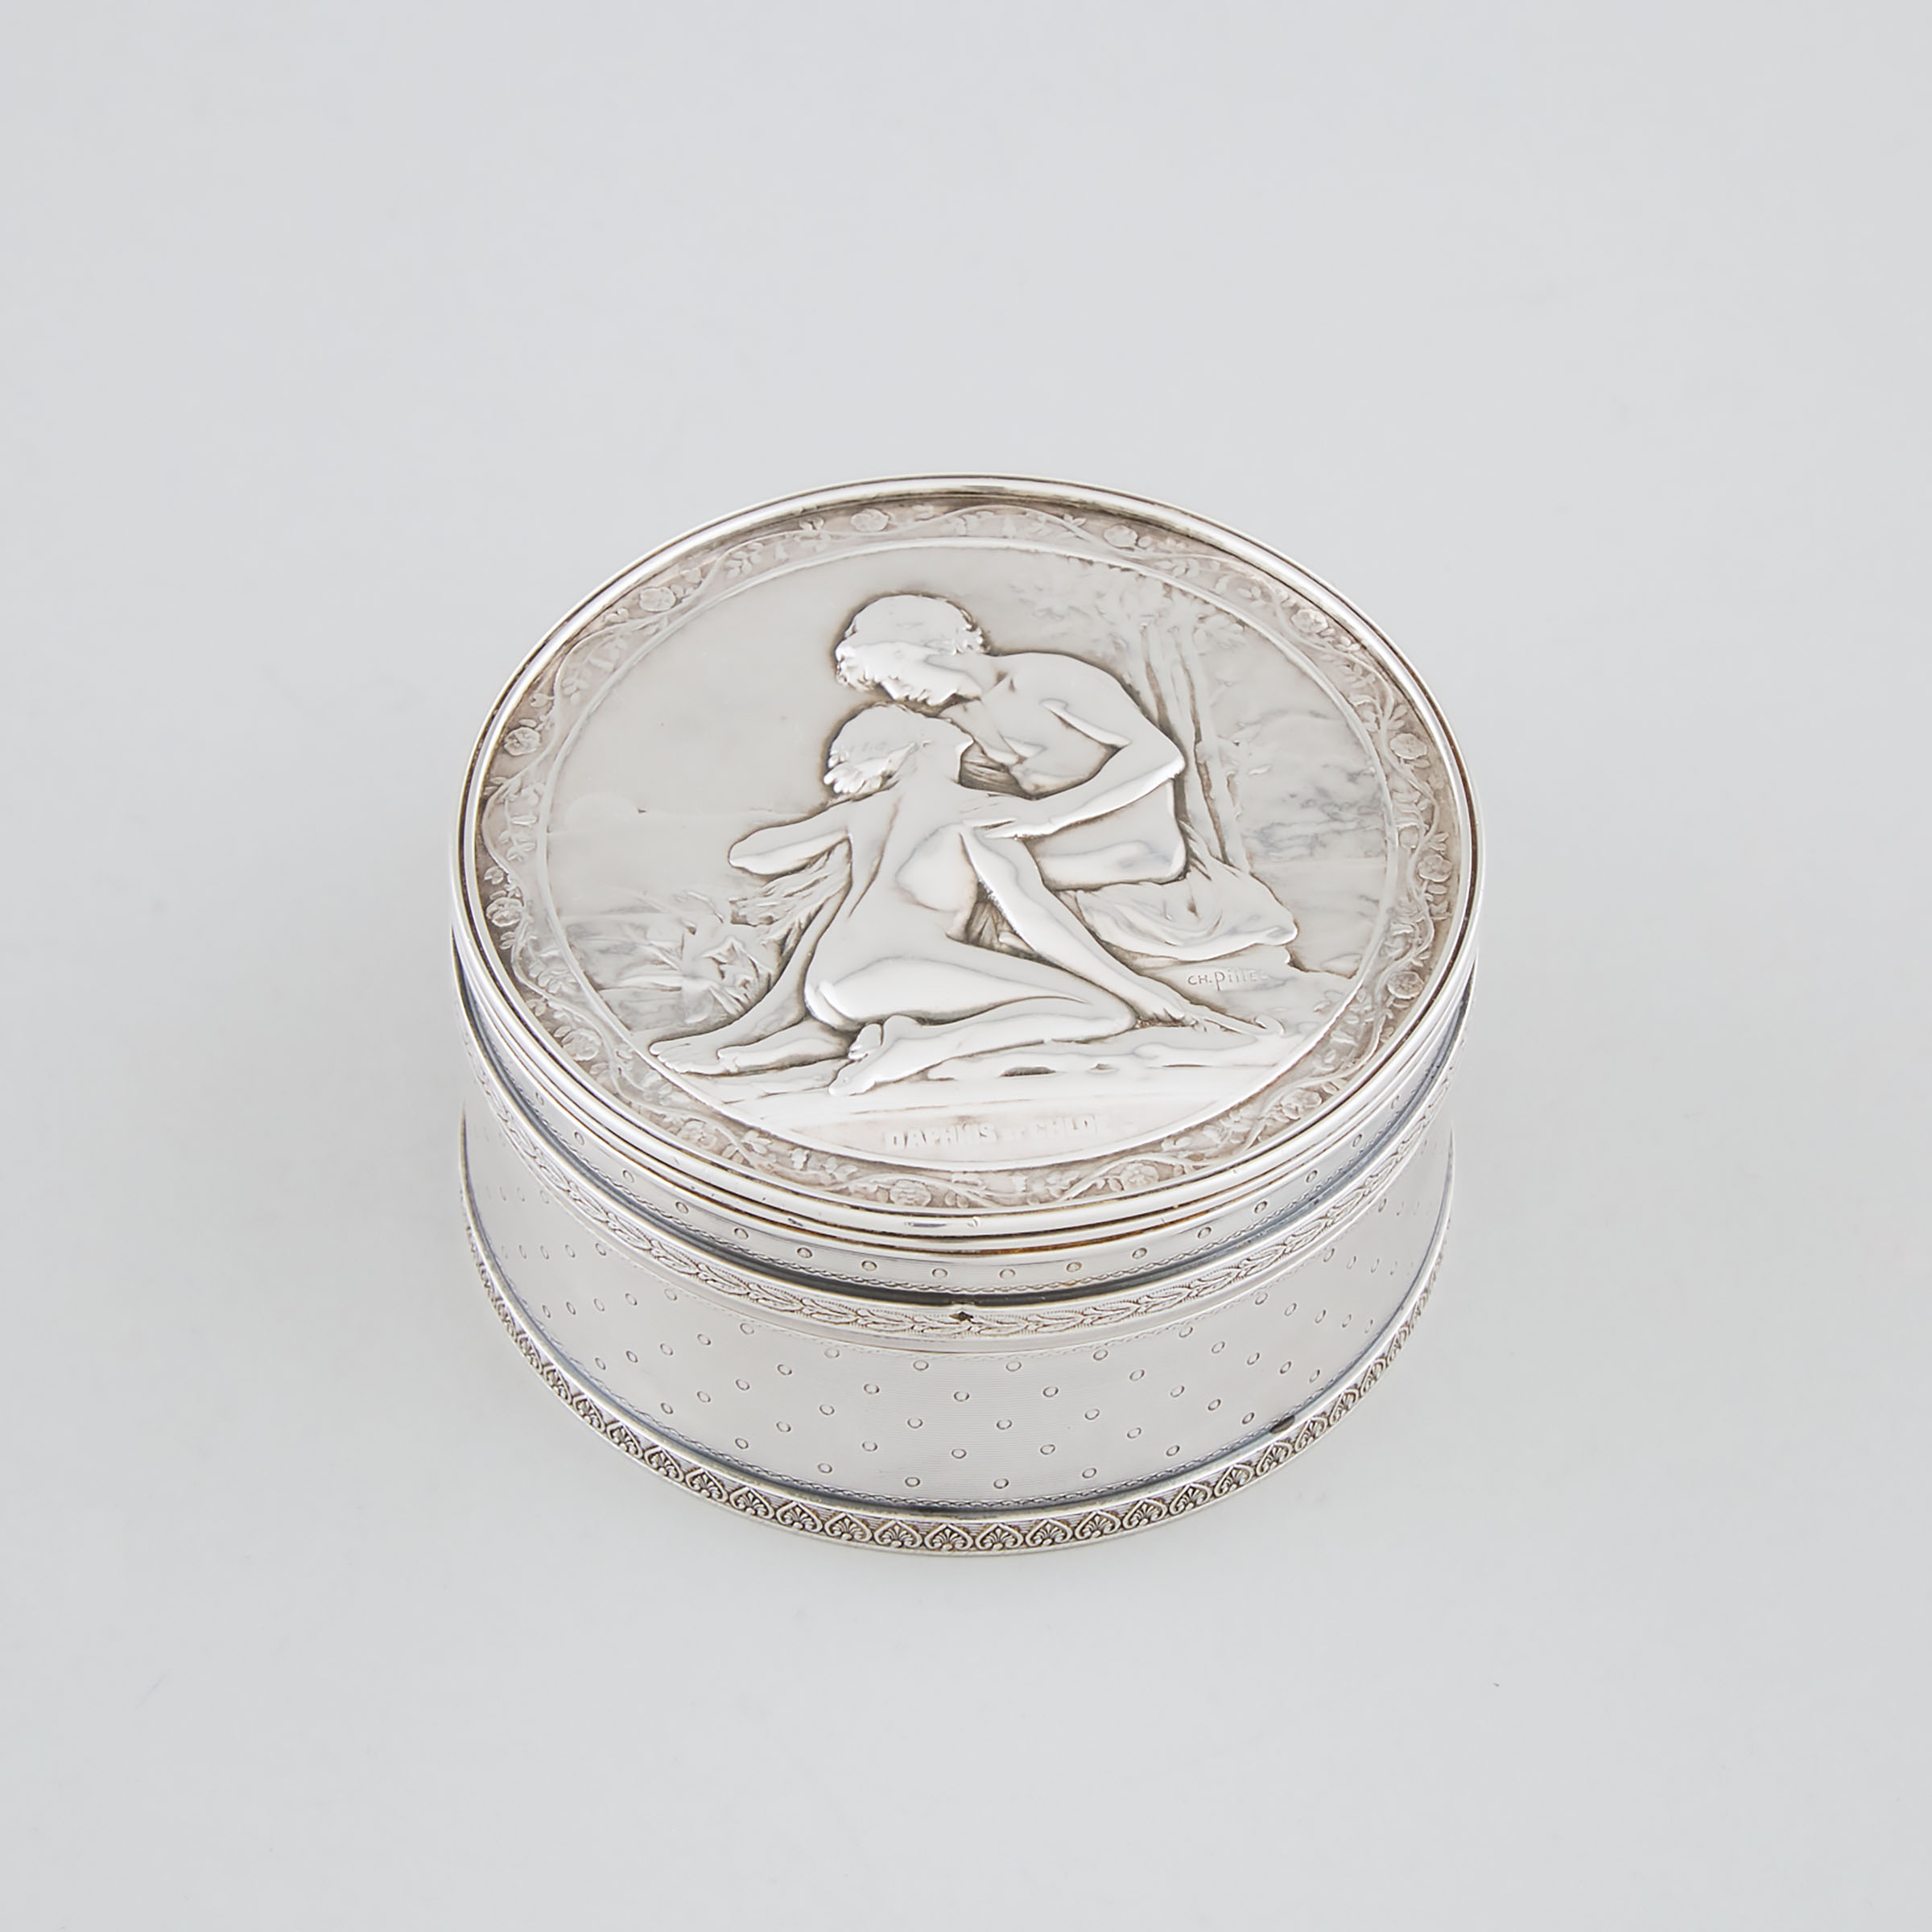 French Silver 'Daphnis et Chloe' Round Box, Charles Pillet, Paris, c.1900